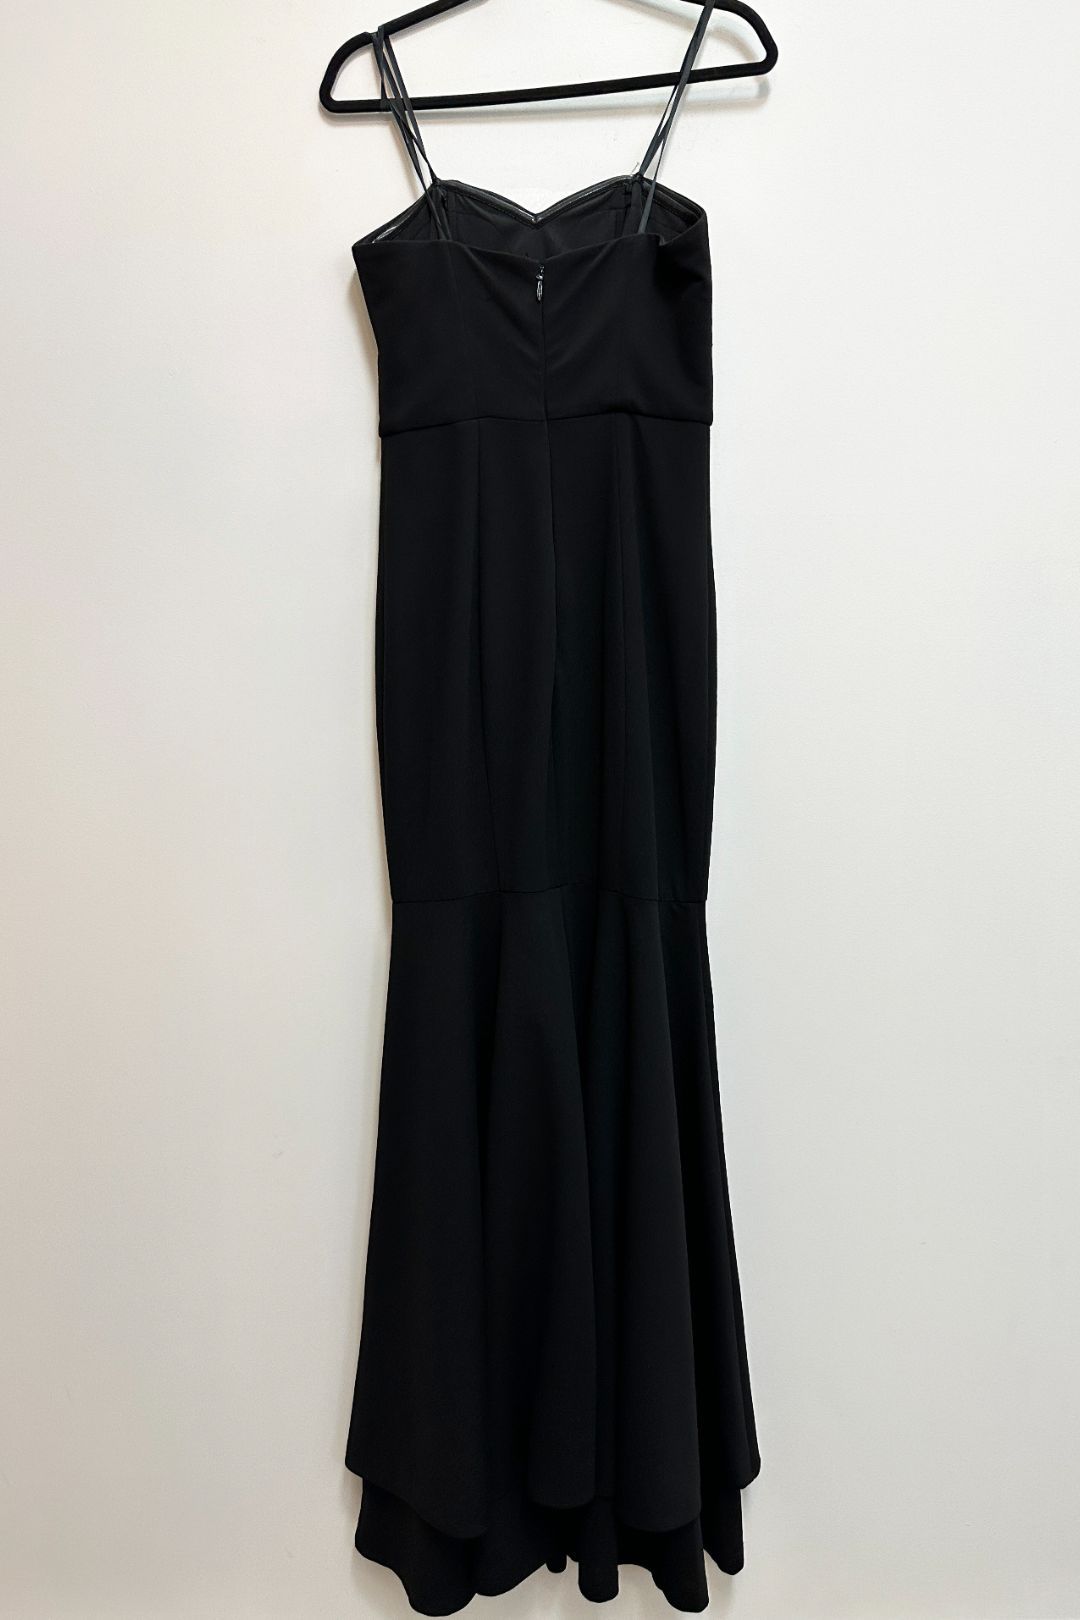 Bariano Bandeau Fishtail Bodycon Dress in Black